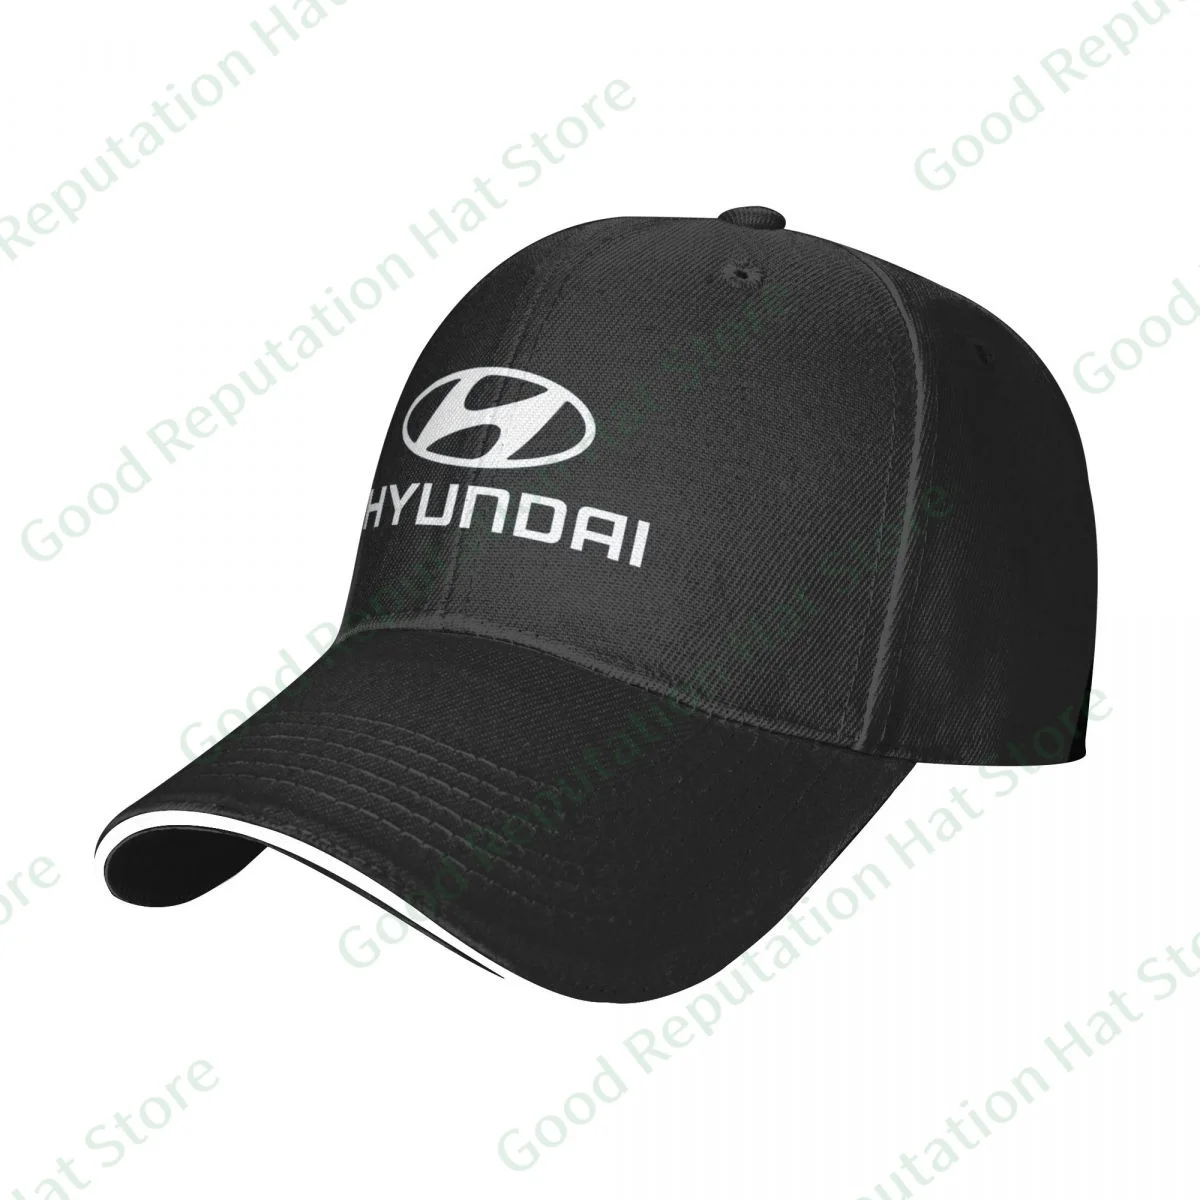 

Men Women Multiple Colour Hyundai Baseball Cap Peaked Cap Adjustable Unisex Summer Dad Hat Shade Sport Baseball Hats